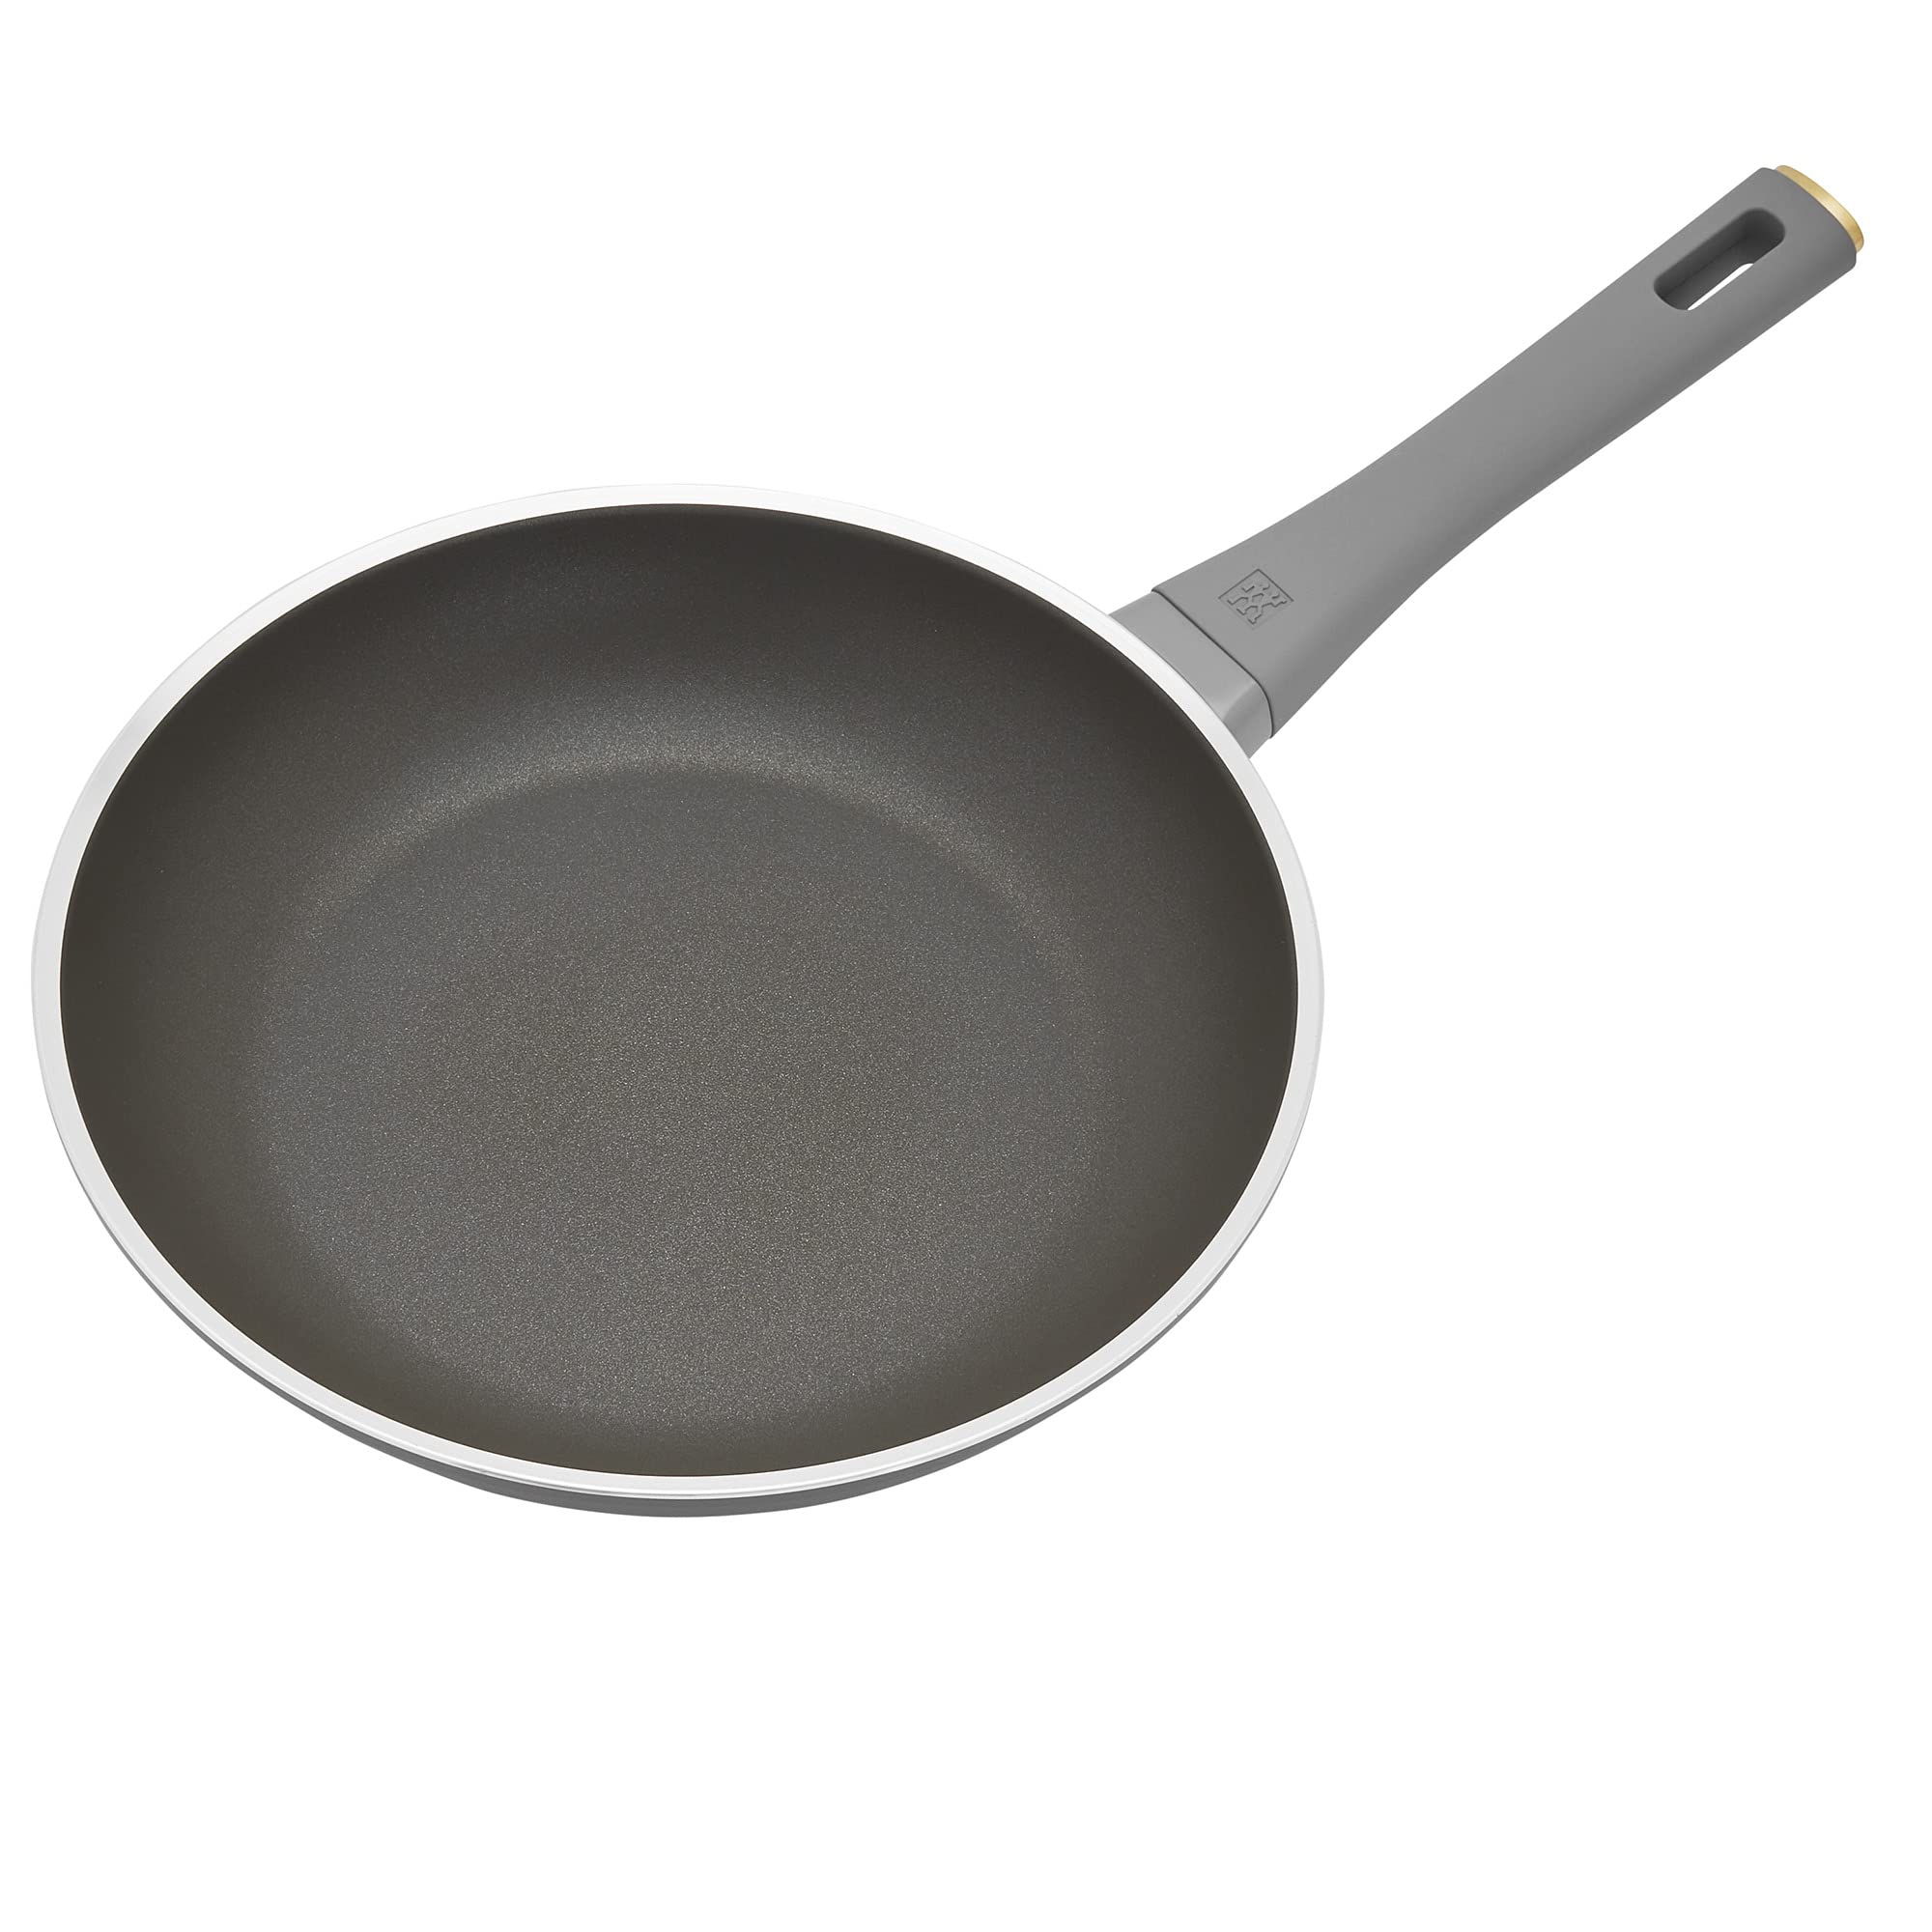 ZWILLING Madura Plus Slate 10-inch Nonstick Fry Pan